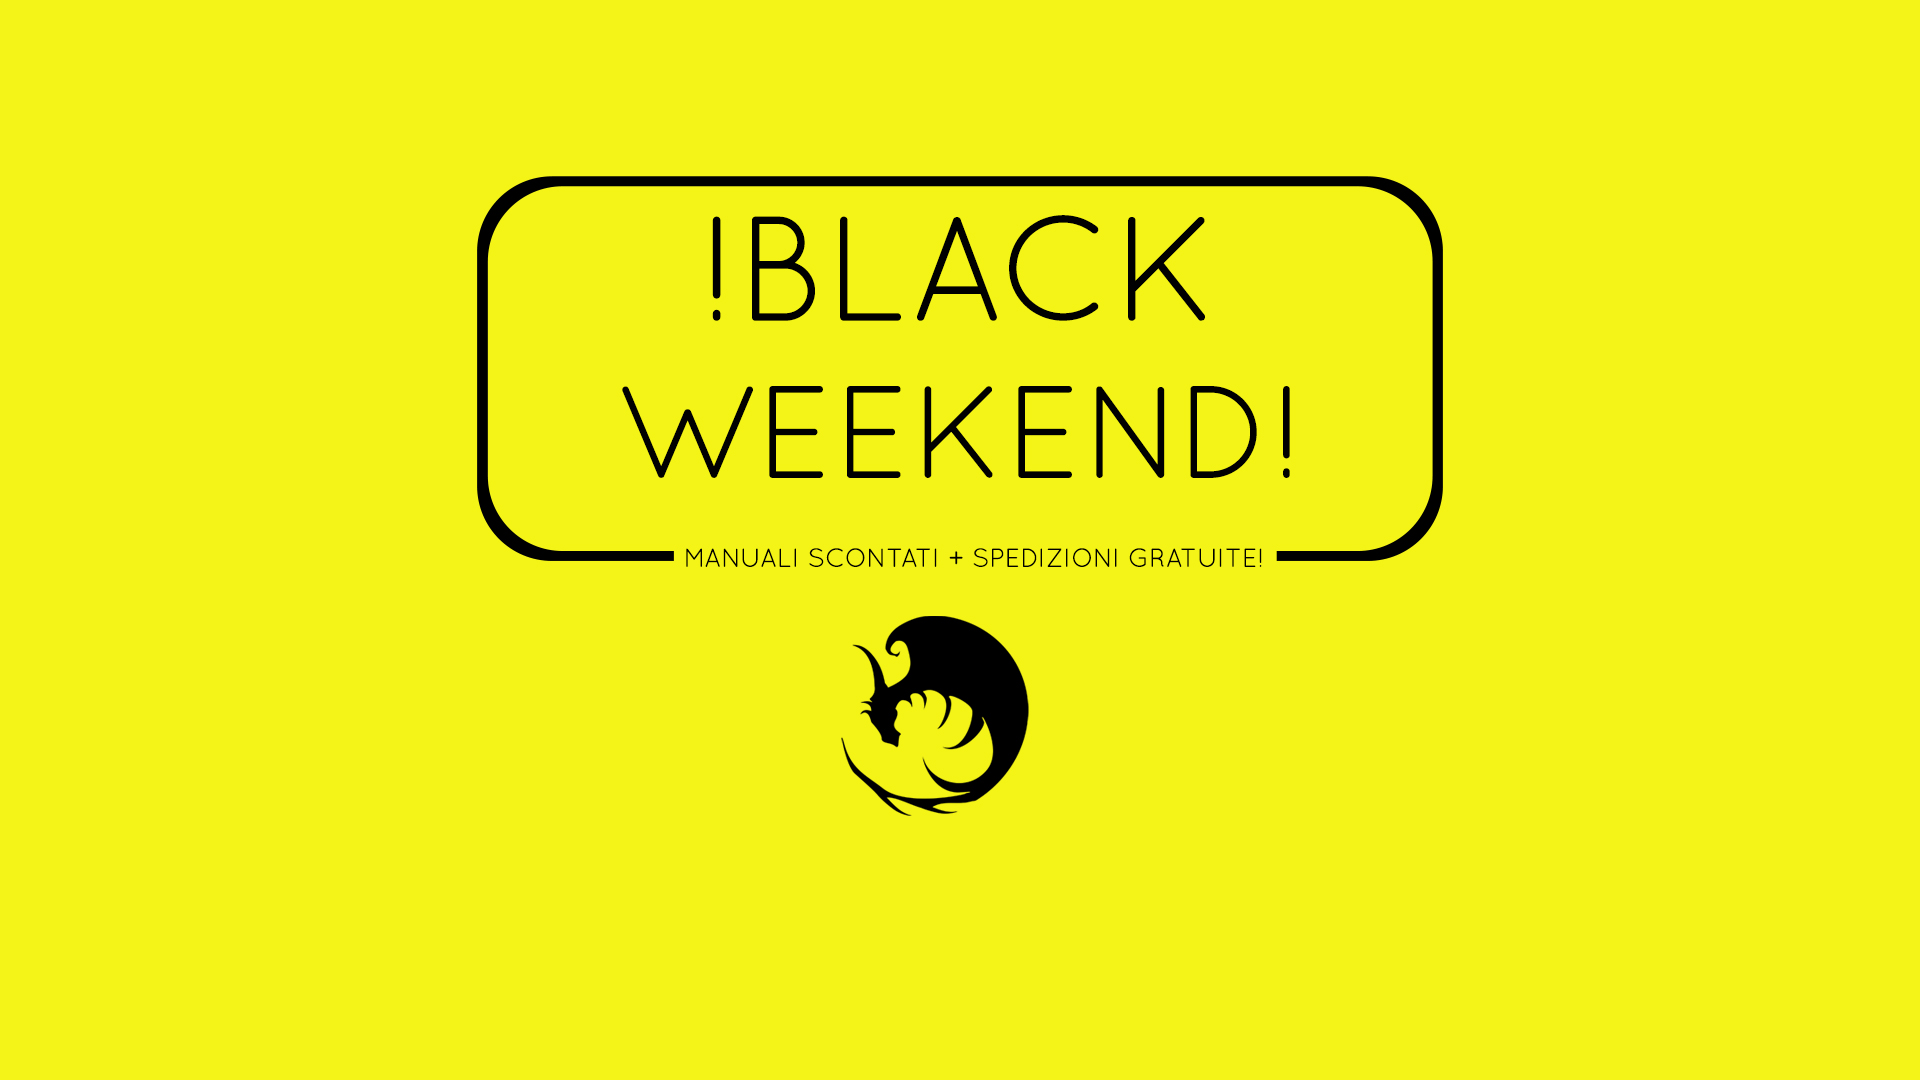 Black-Weekend-Isola-Illyon-Edizioni-Offerte